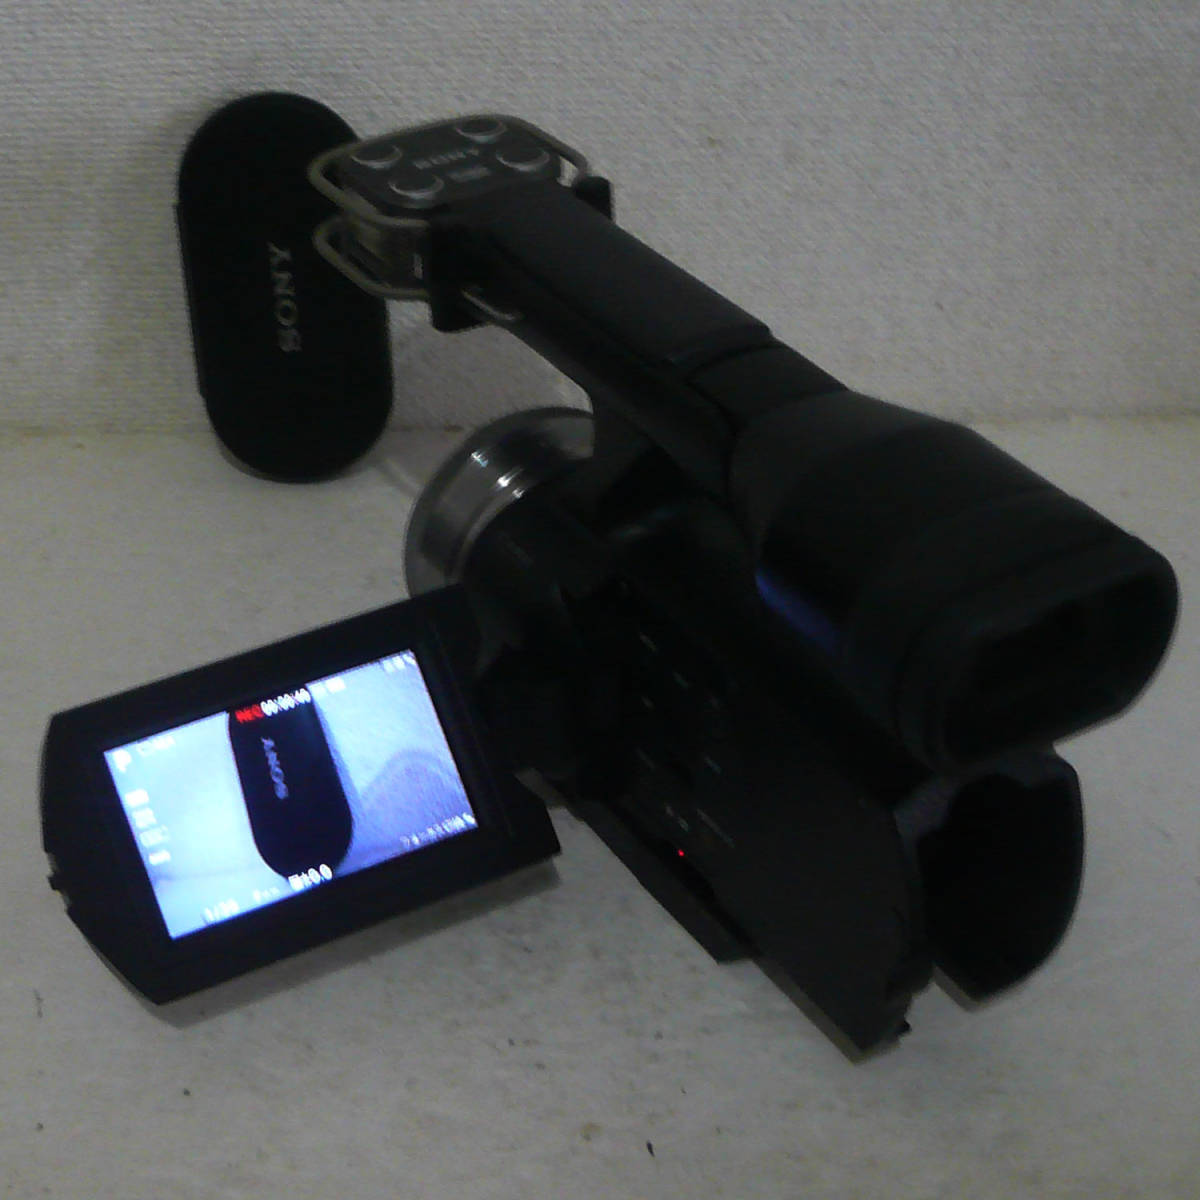 Sony【 NEX-VG10 】シネマカメラ フルハイビジョン 撮影再生可能 本体のみ 訳有品_画像4